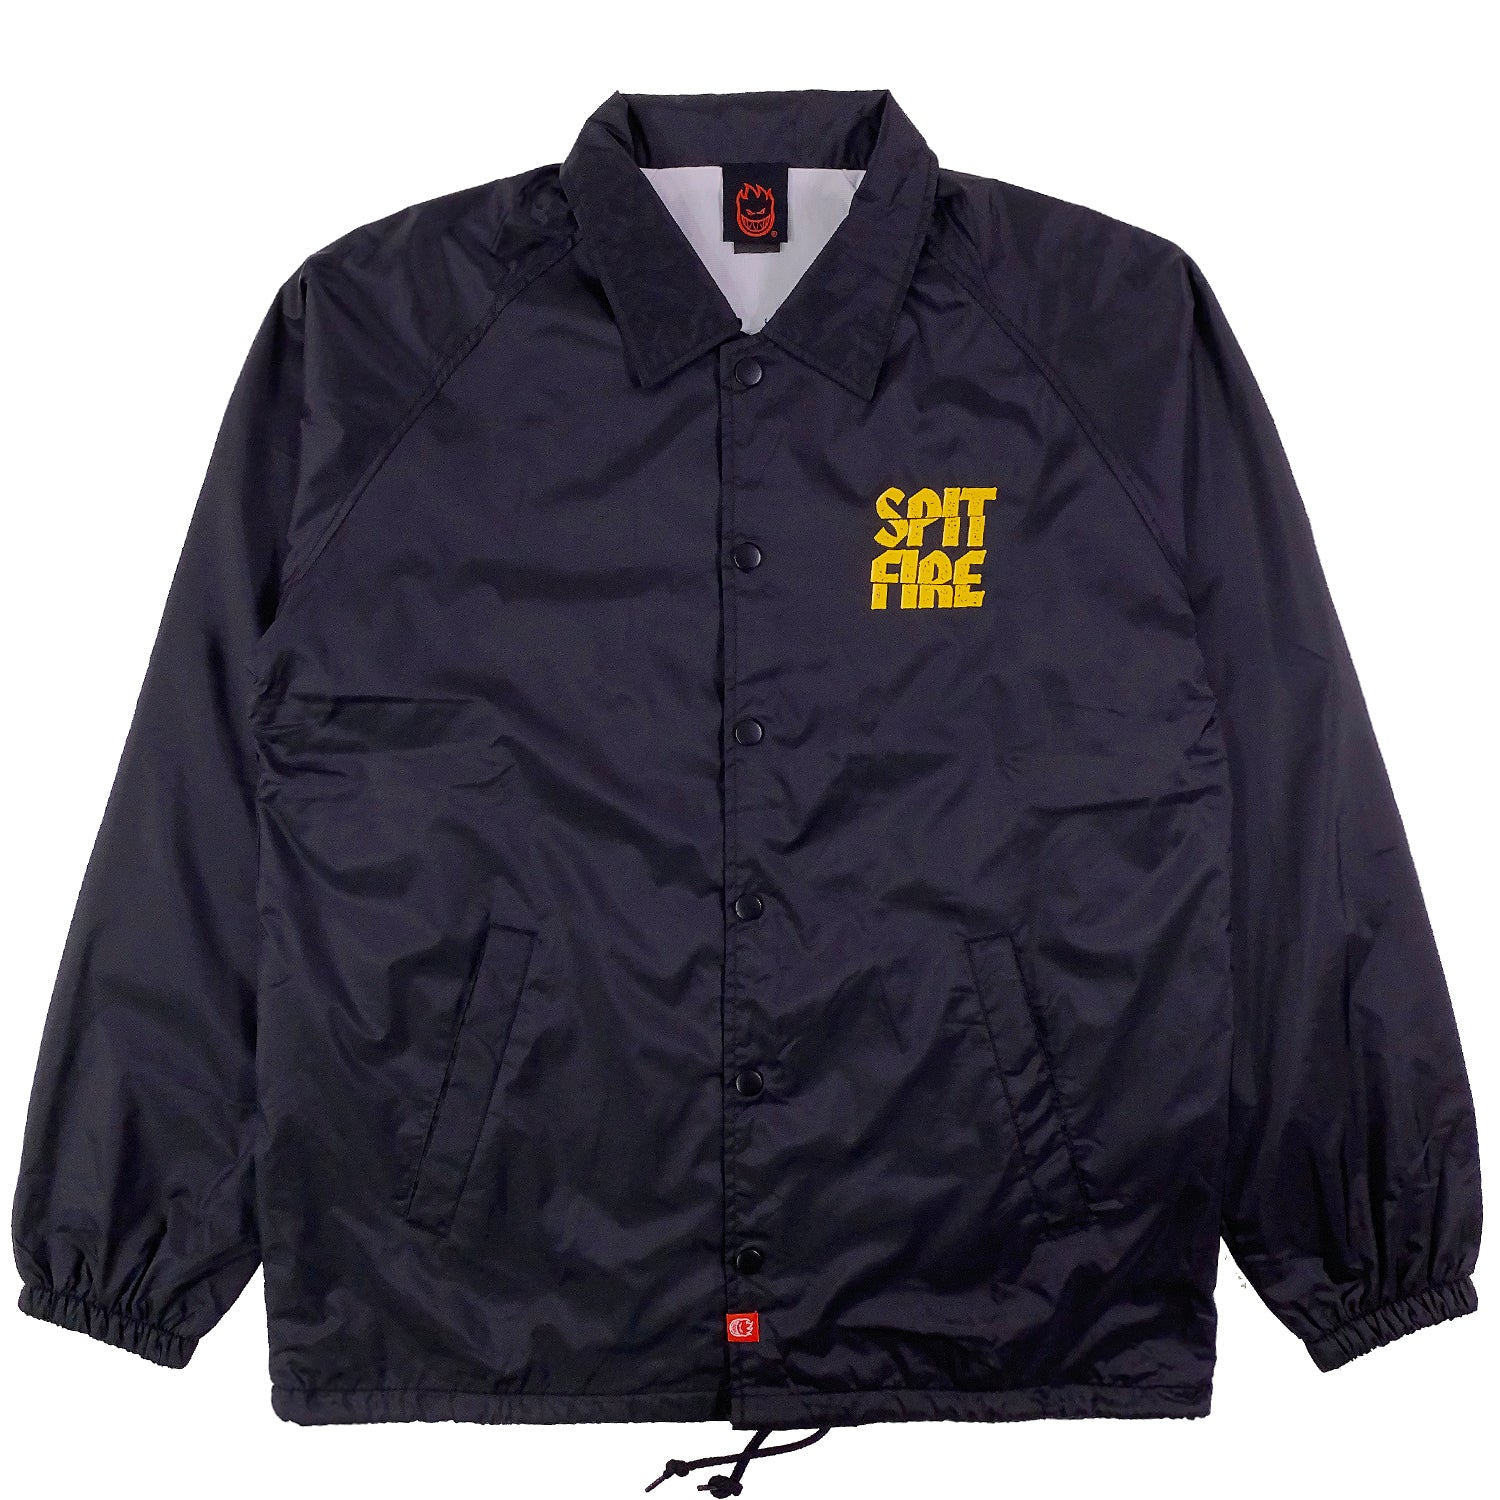 Spitfire Jacket Clean Cut - Black / Yellow - Prime Delux Store